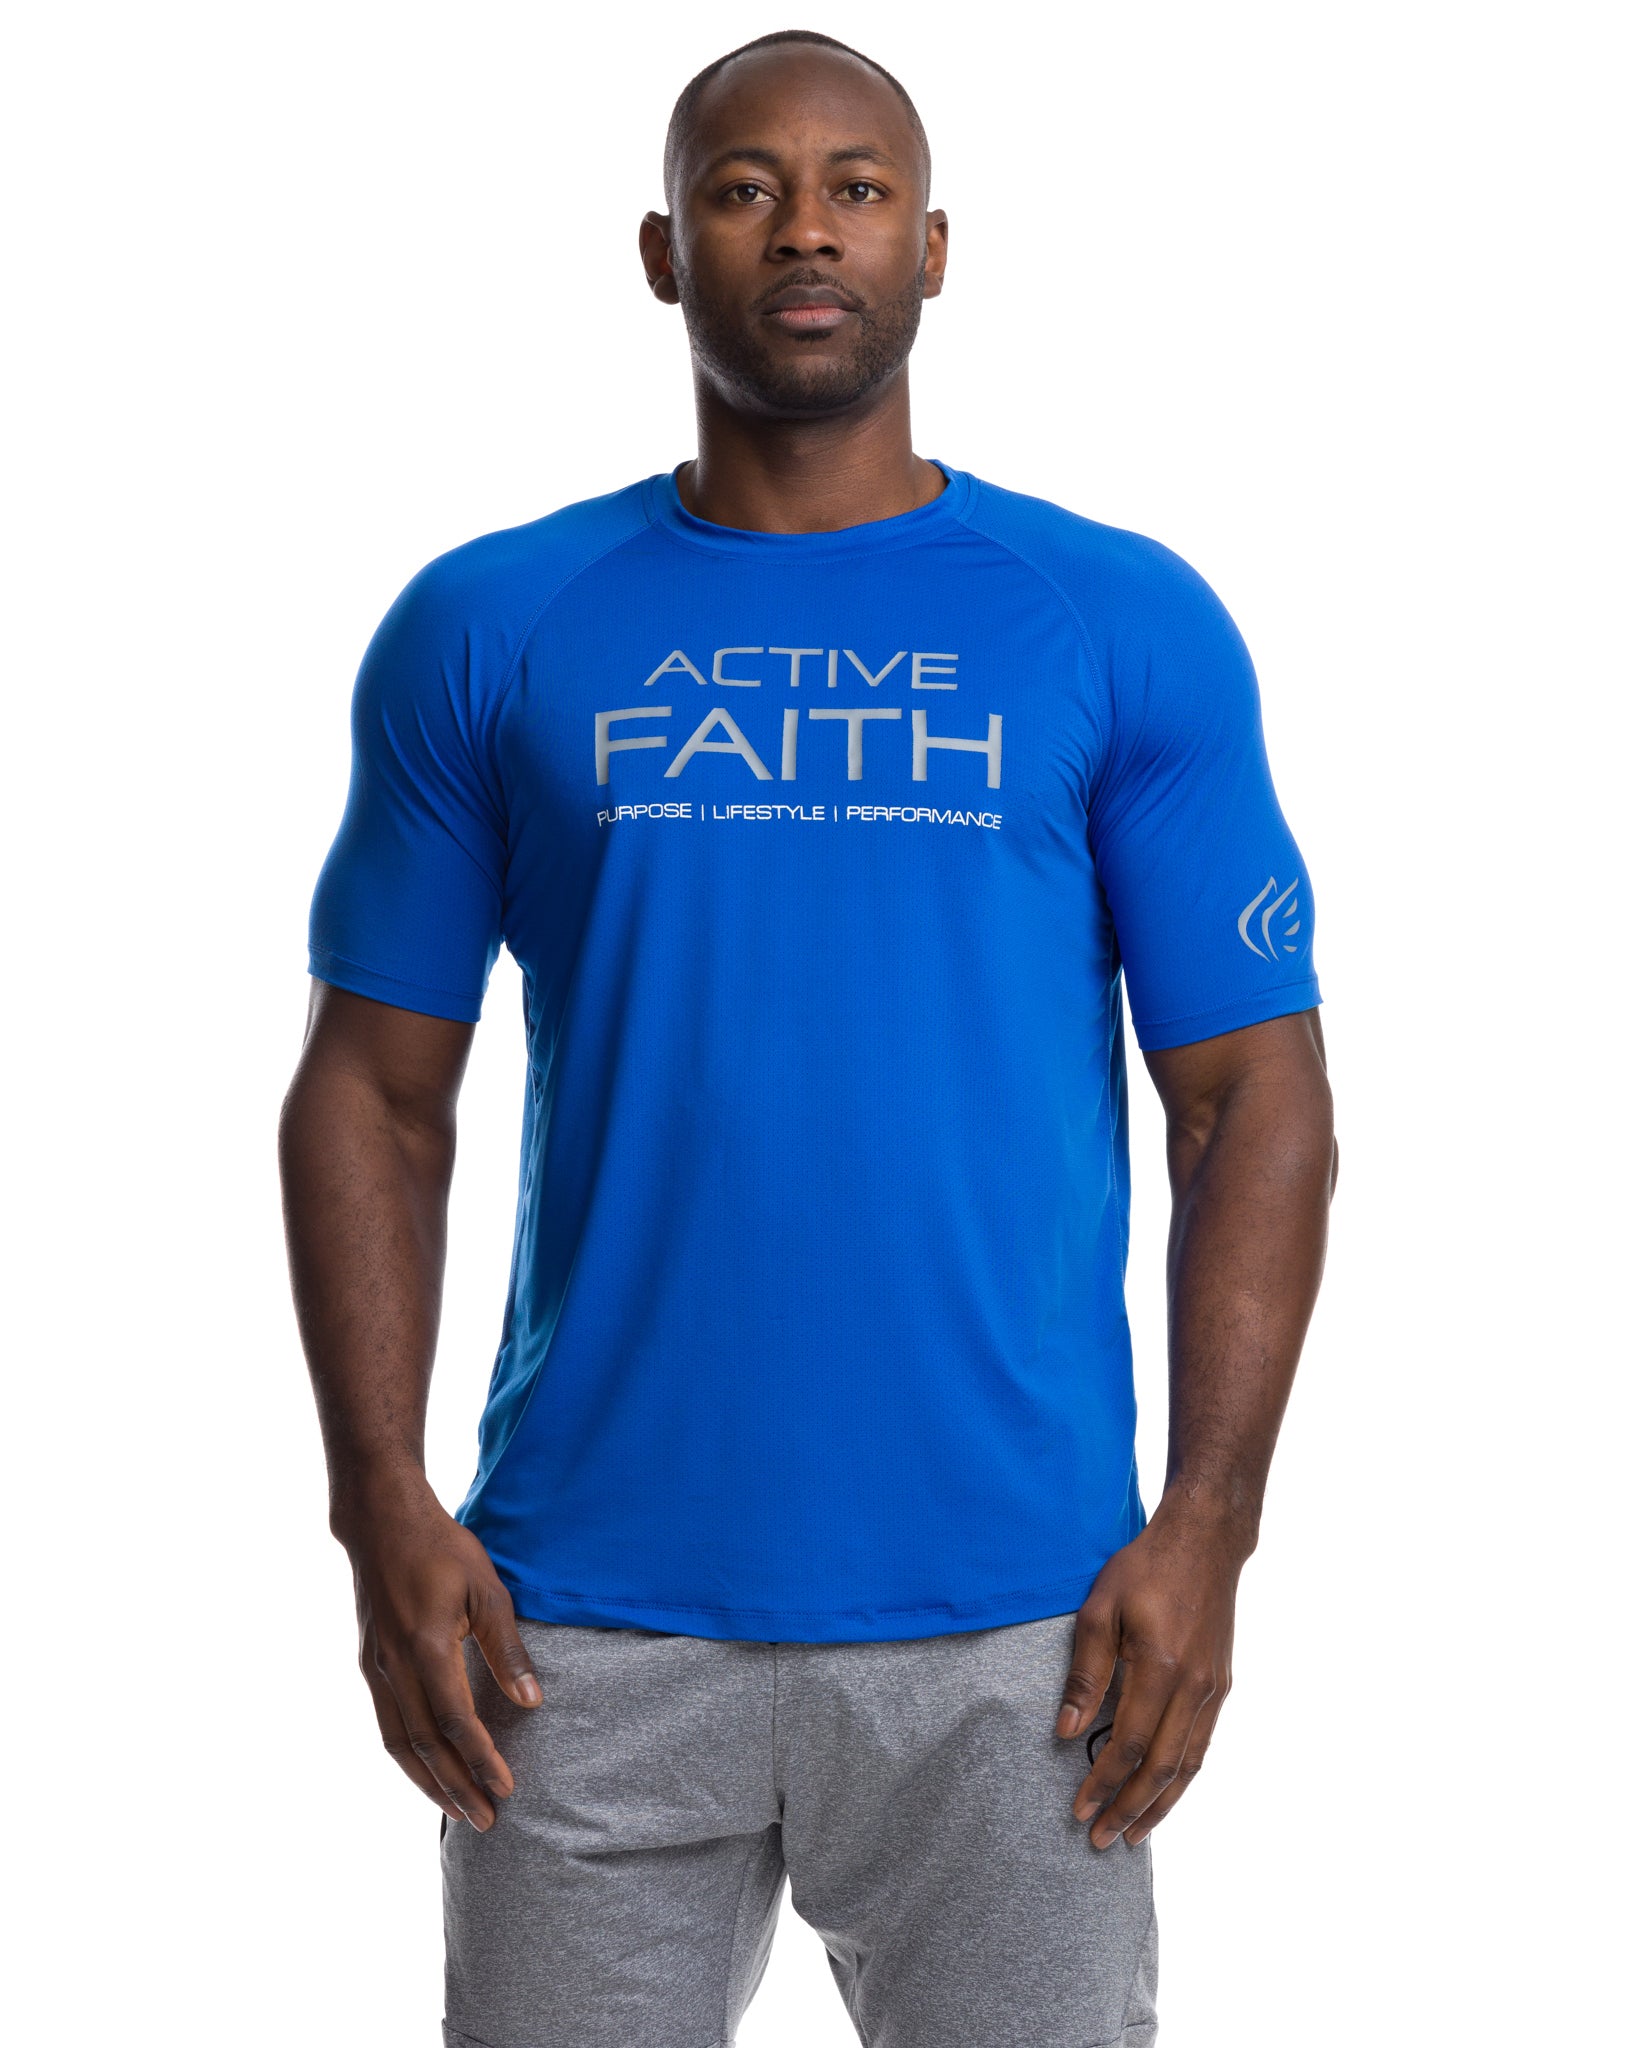 Men's Active Faith Lifestyle Mesh Shirt